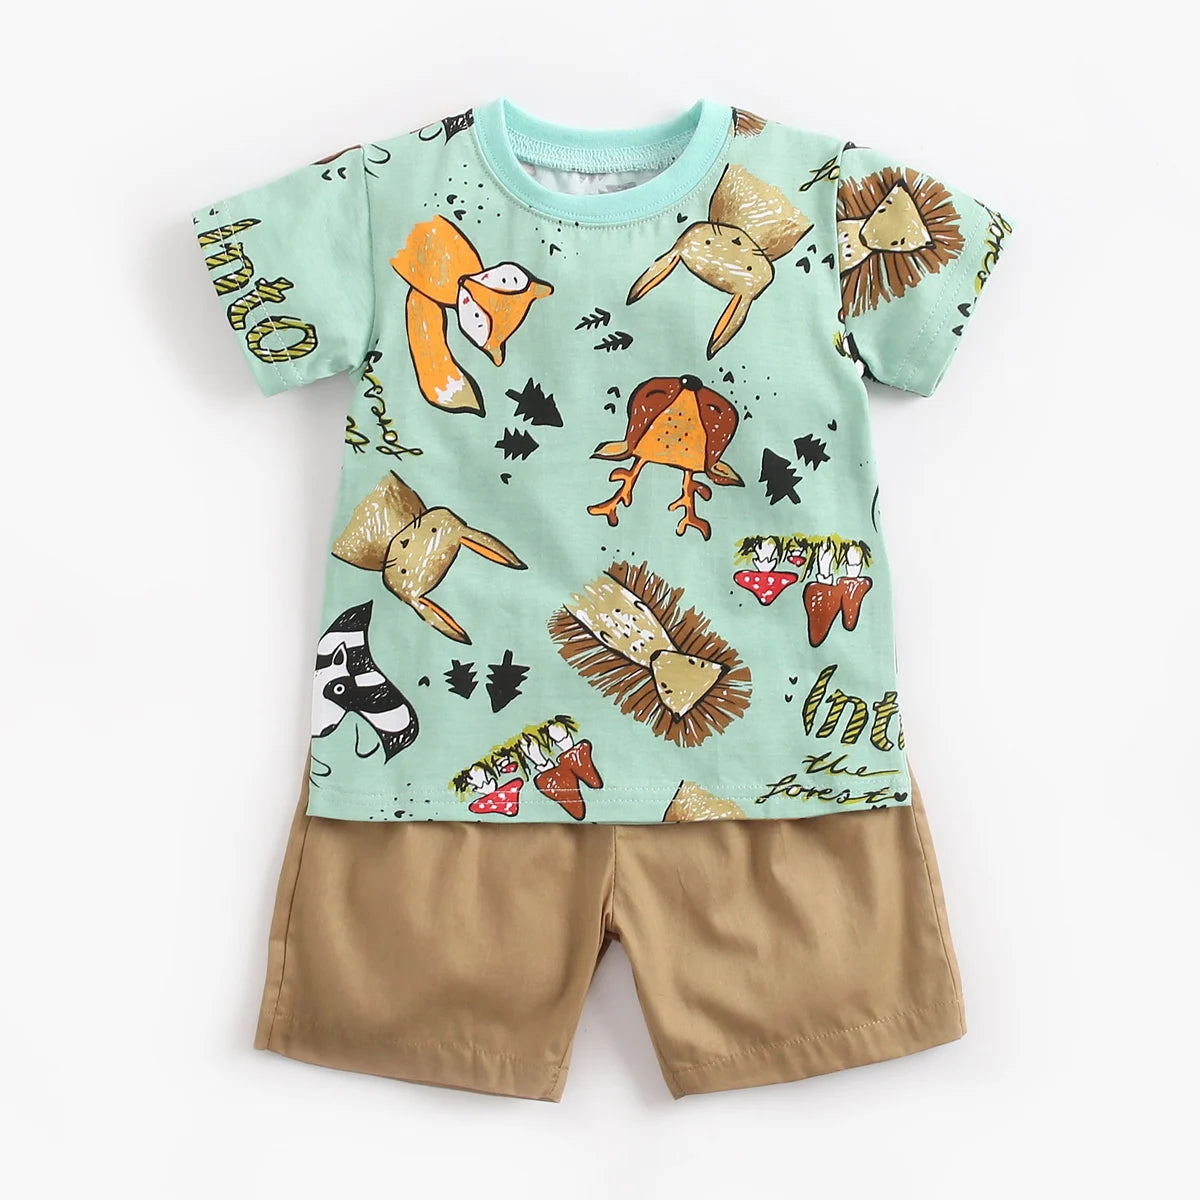 Sanlutoz Baby Boys Summer Clothing Sets Cartoon Short Sleeve Cotton Baby Outfit Sets Shirts + Shorts 2pcs